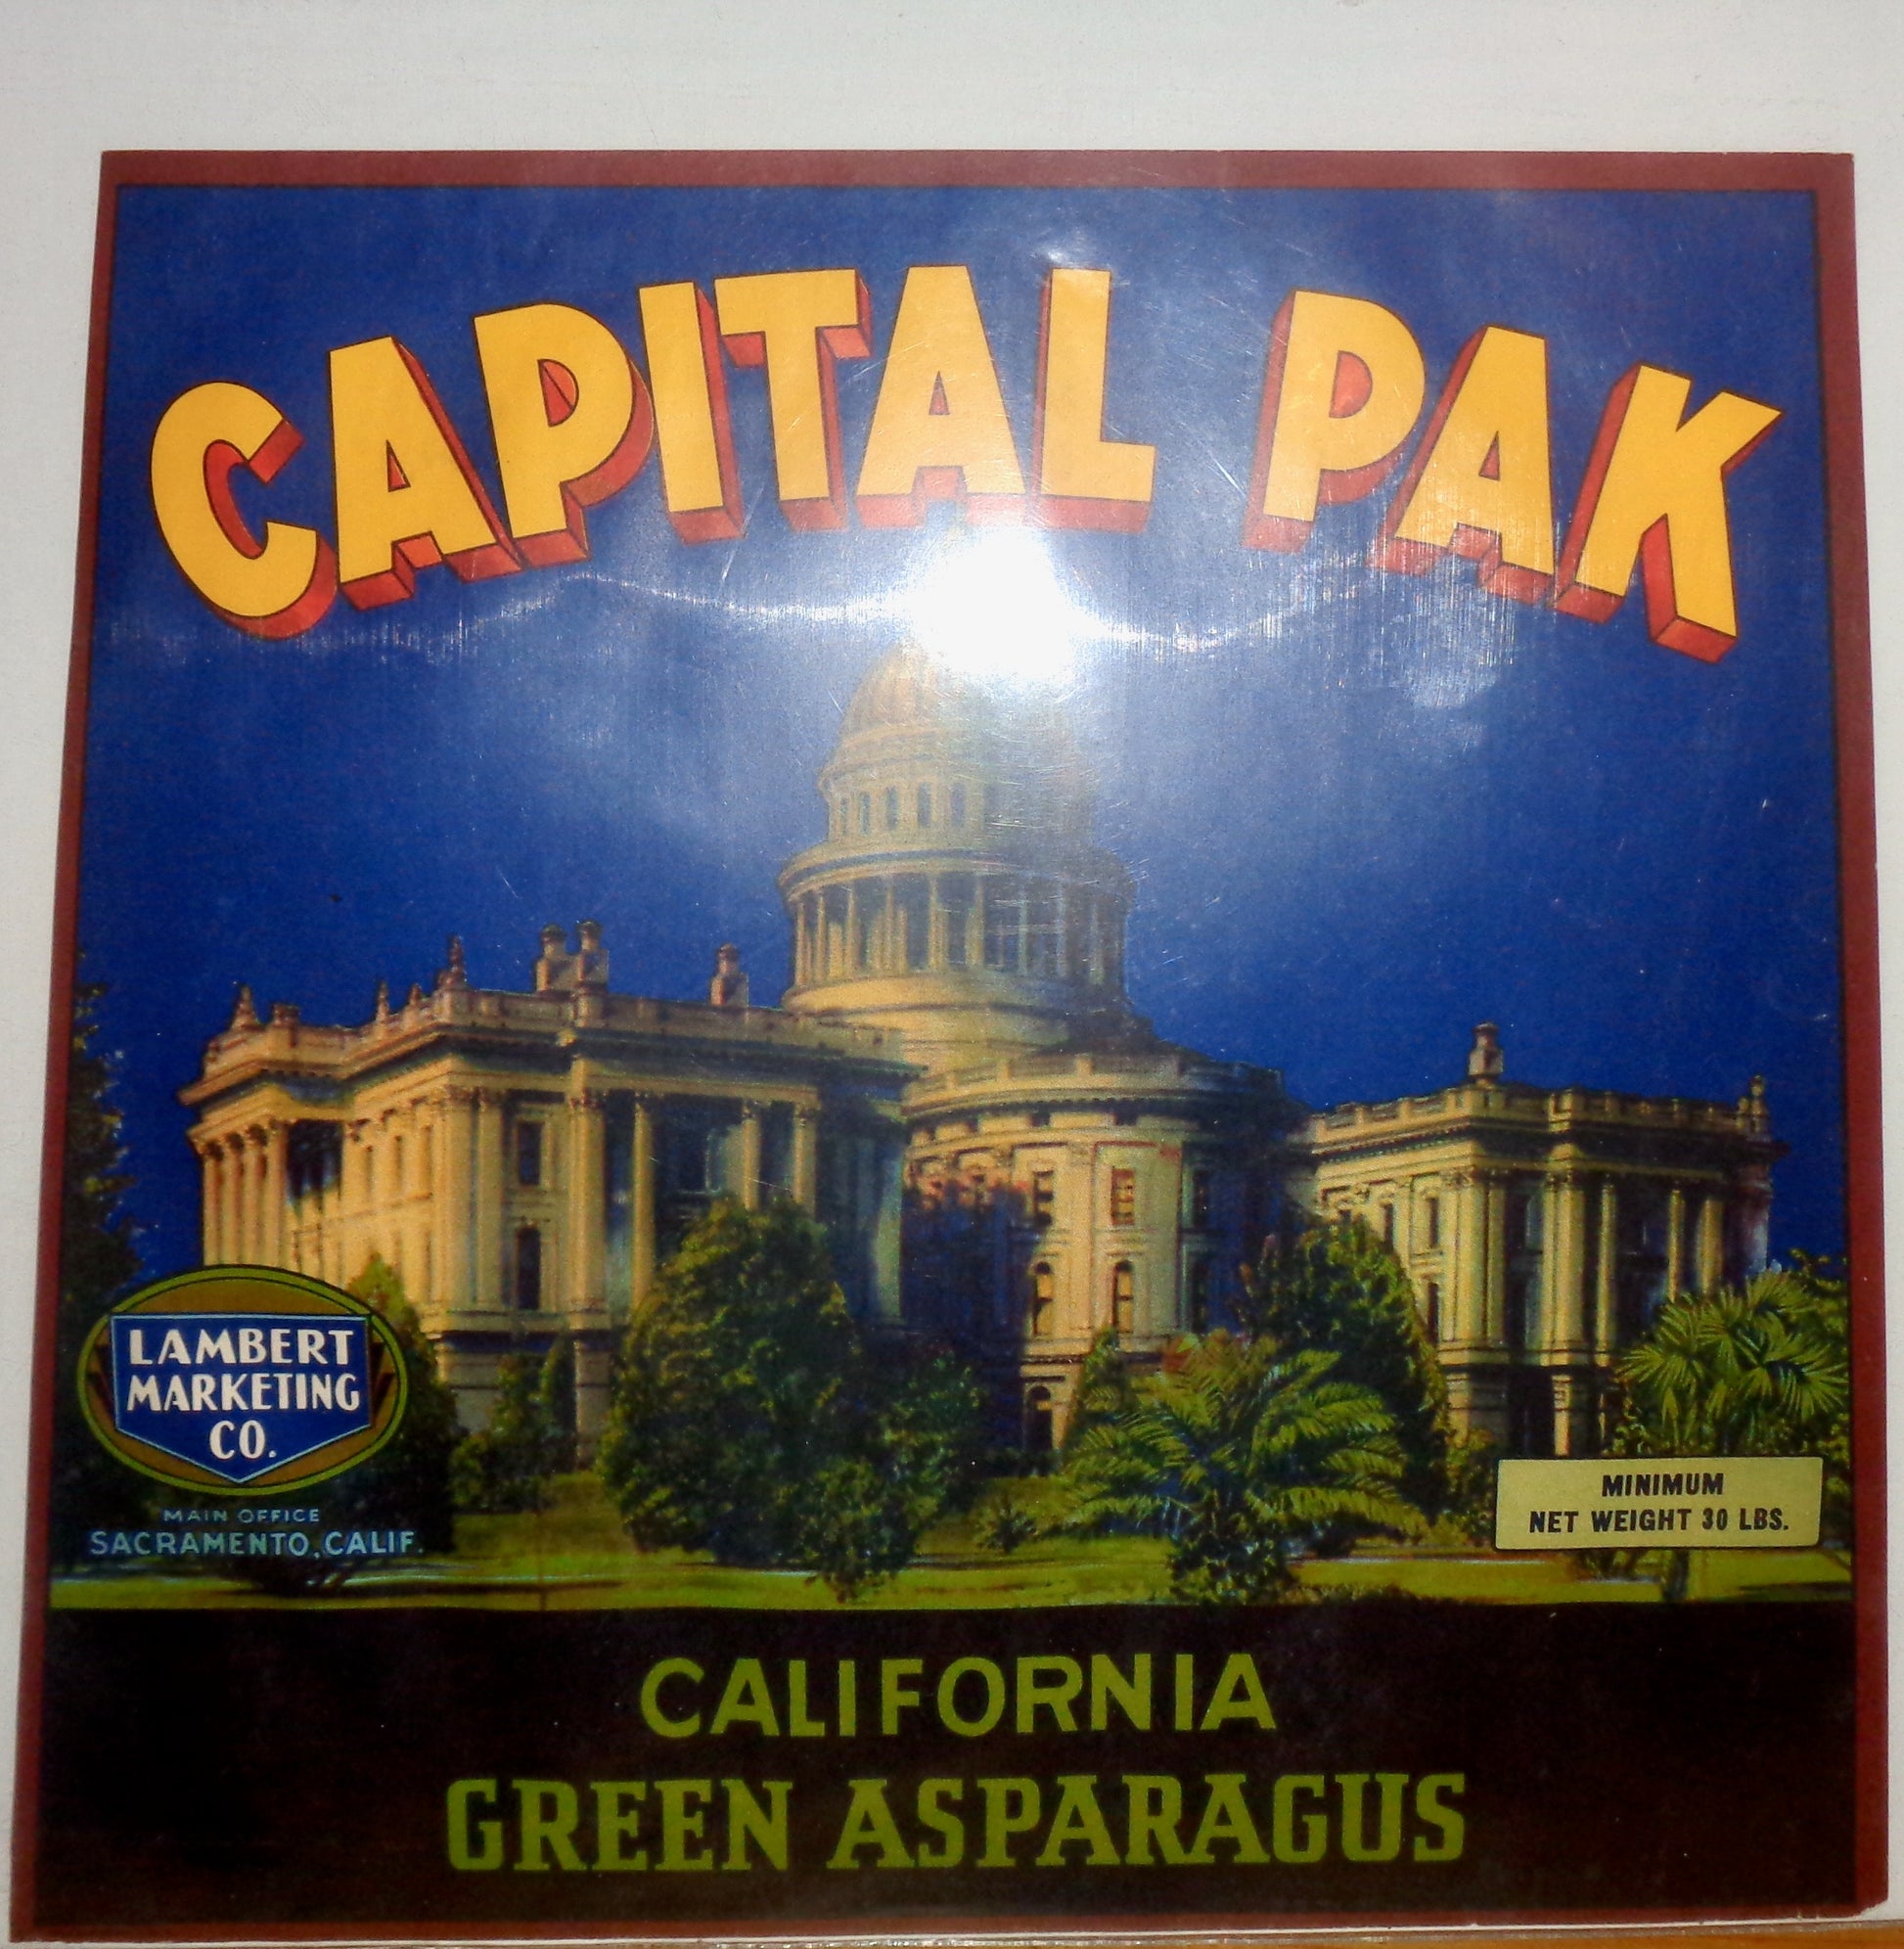 Vintage Original Fruit Crate Label For Capital Oak California Green Asparagus